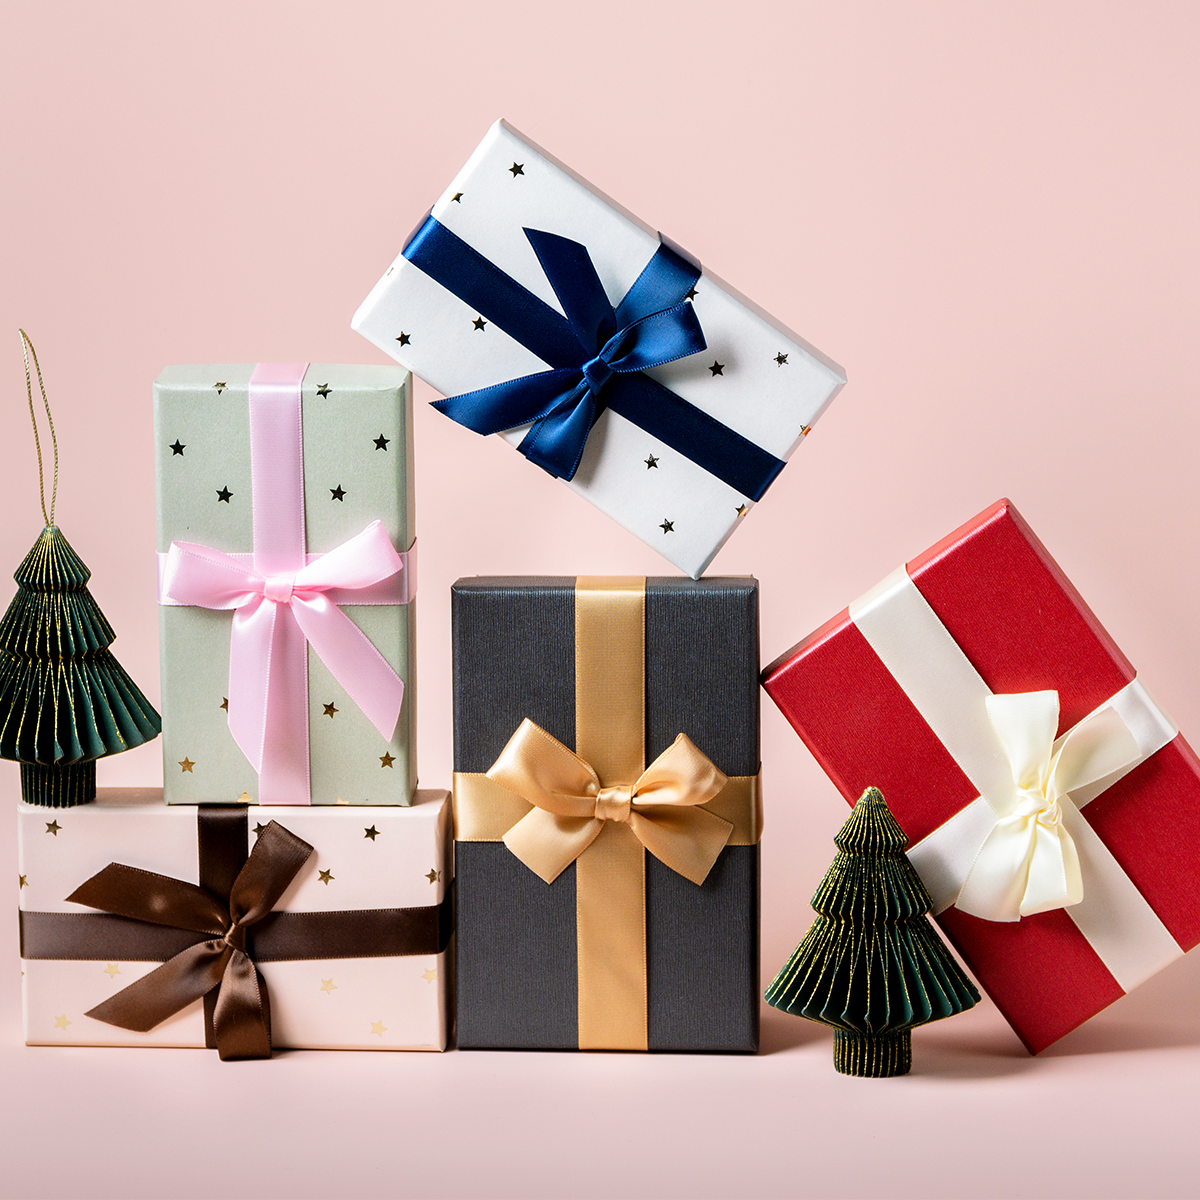 6 Last Minute Virtual Christmas Gift Ideas